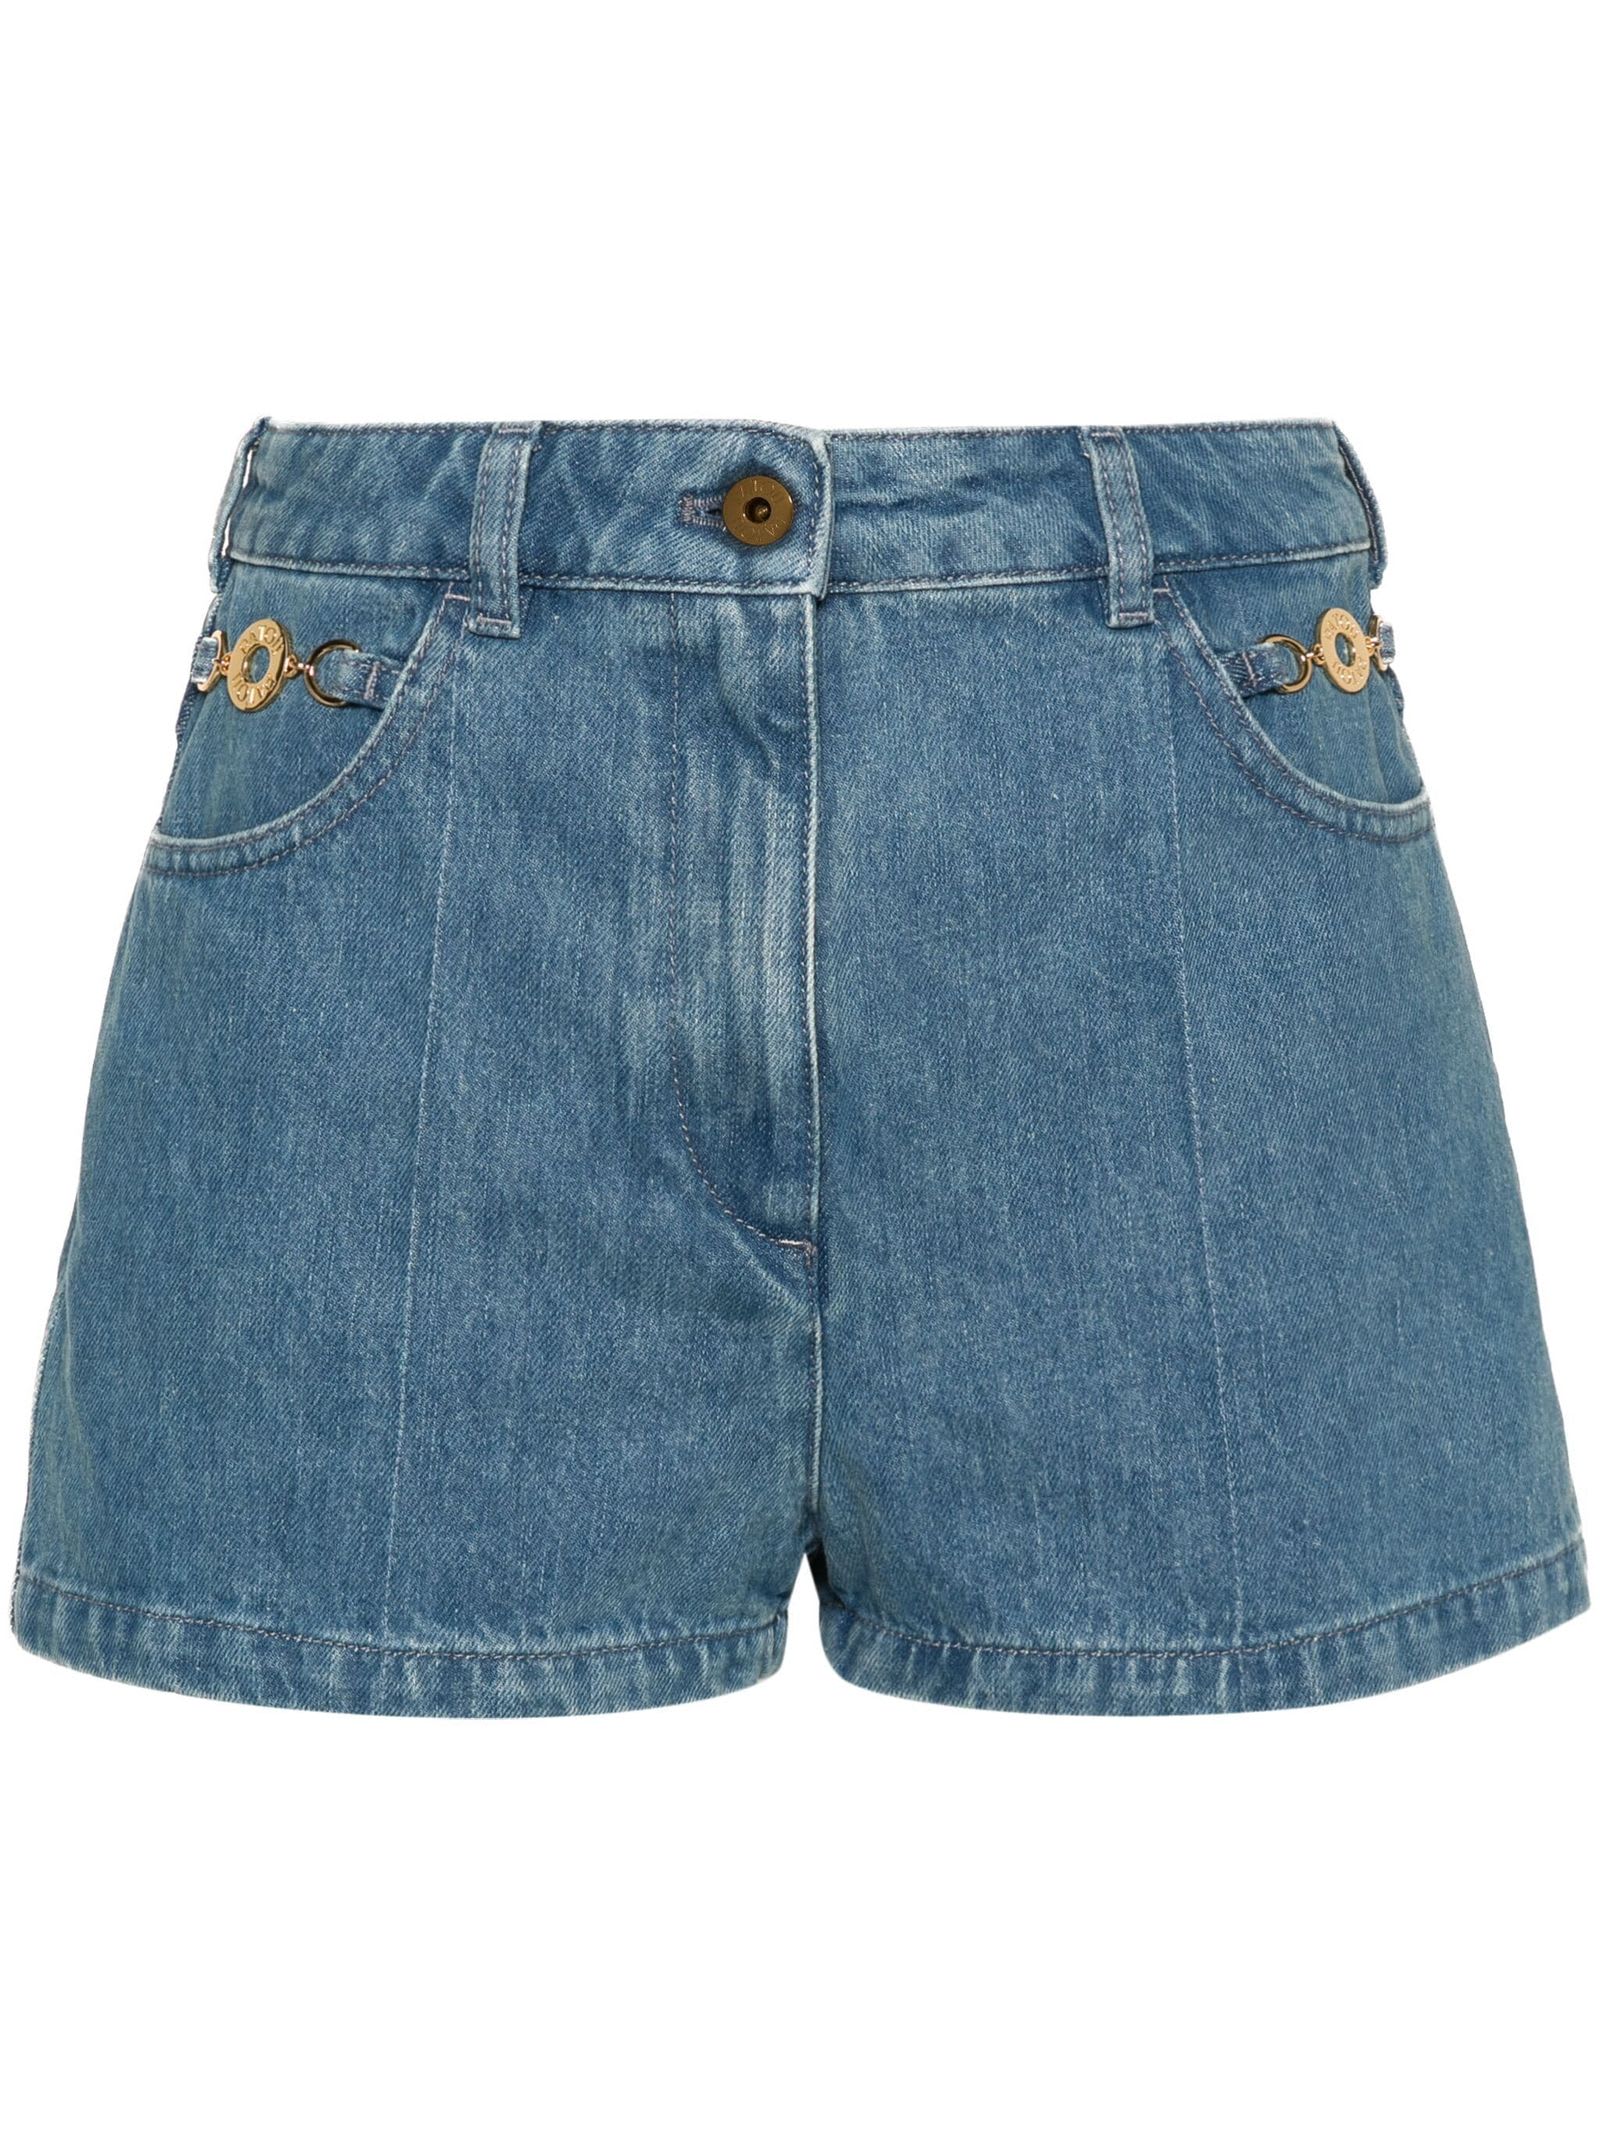 Medium Blue Cotton Blend Shorts